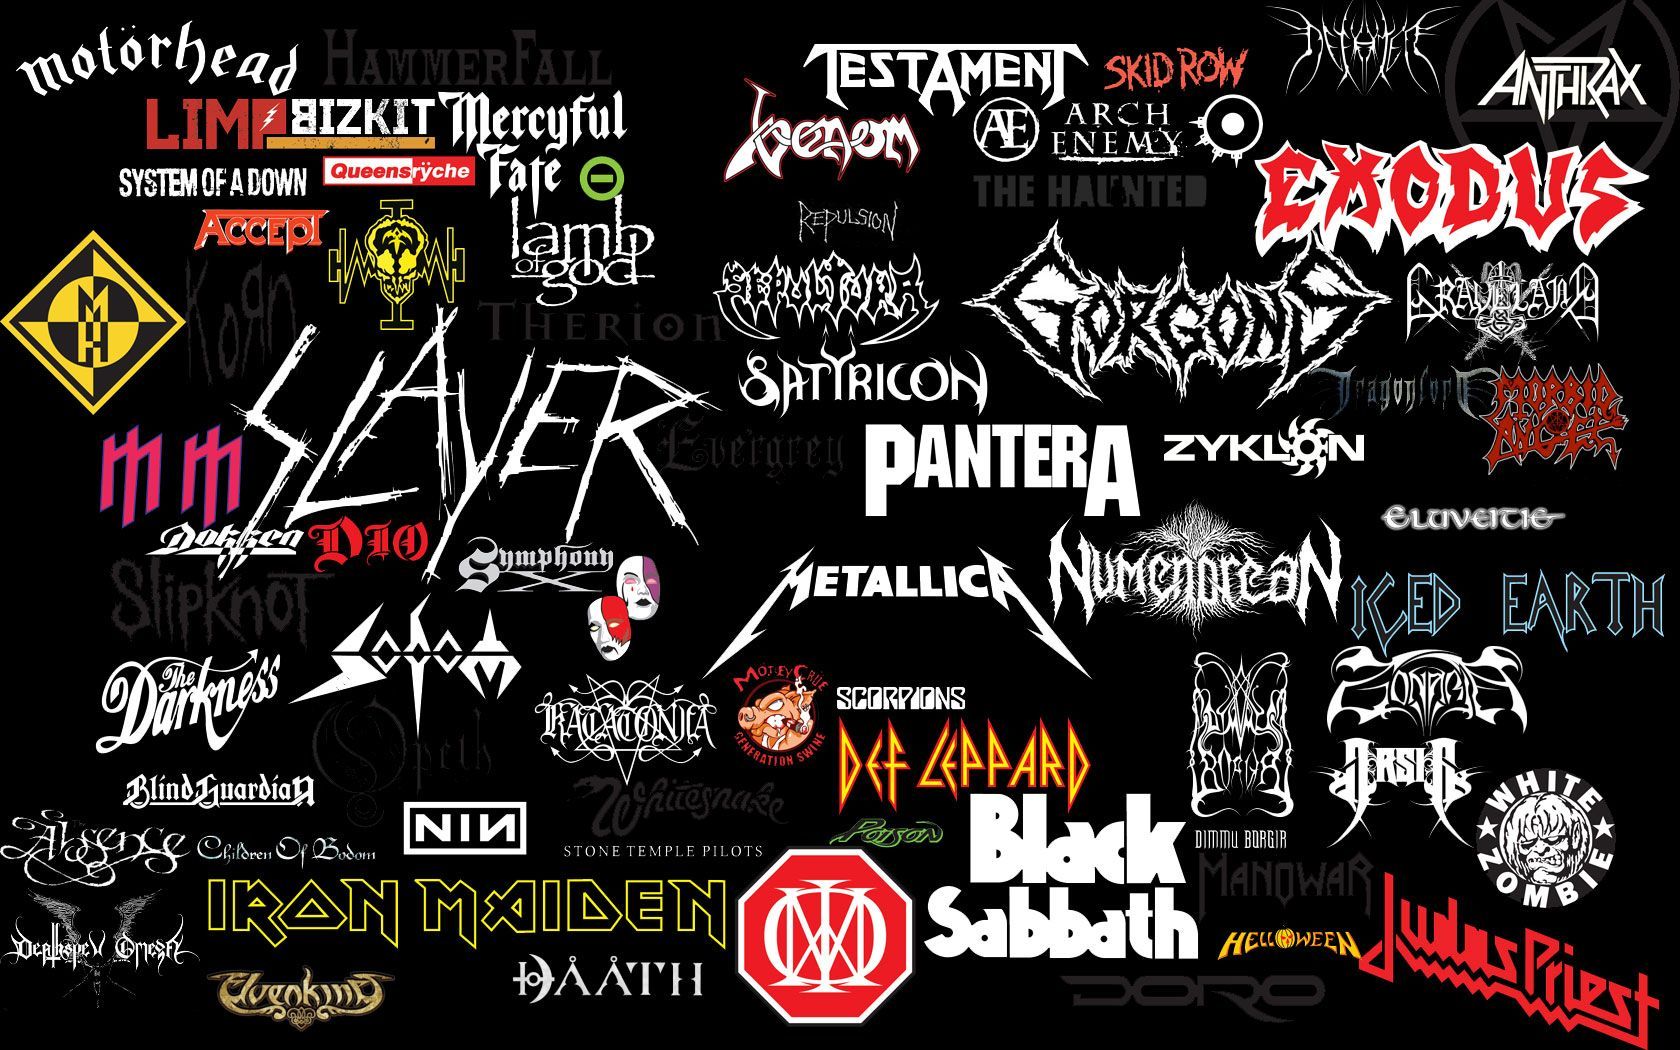 Heavy Metal Music. Music Heavy Metal Wallpaper Background 1680 X 1050: 292330. Metal Band Logos, Band Wallpaper, Metal Music